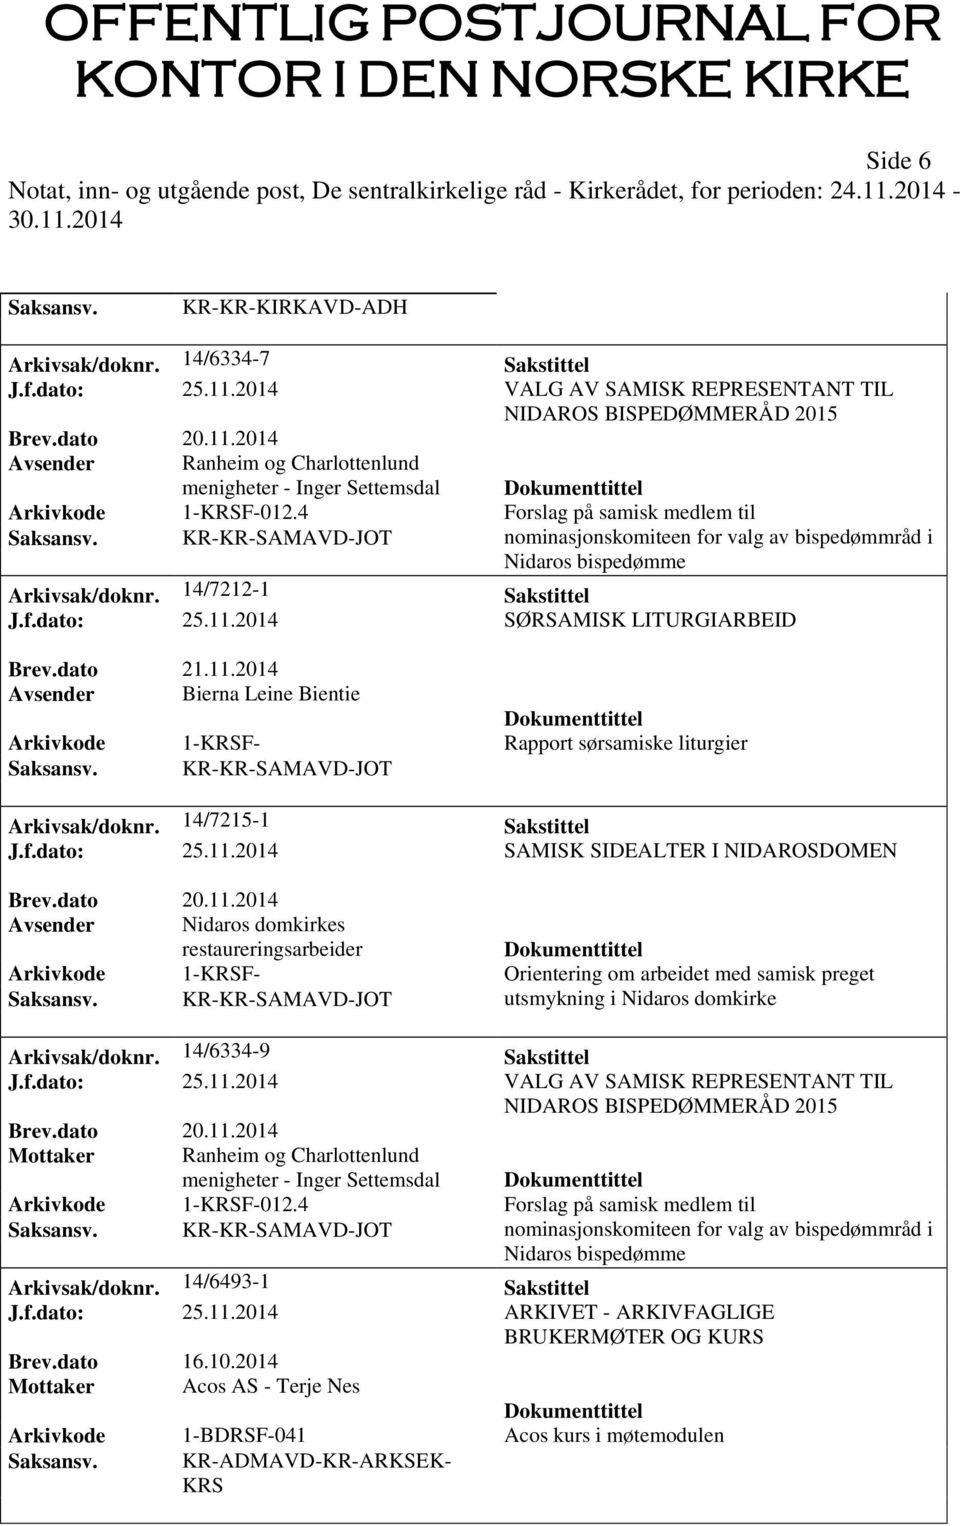 2014 SØRSAMISK LITURGIARBEID Brev.dato 21.11.2014 Avsender Bierna Leine Bientie Arkivkode 1-F- Rapport sørsamiske liturgier Saksansv. KR-KR-SAMAVD-JOT Arkivsak/doknr. 14/7215-1 Sakstittel J.f.